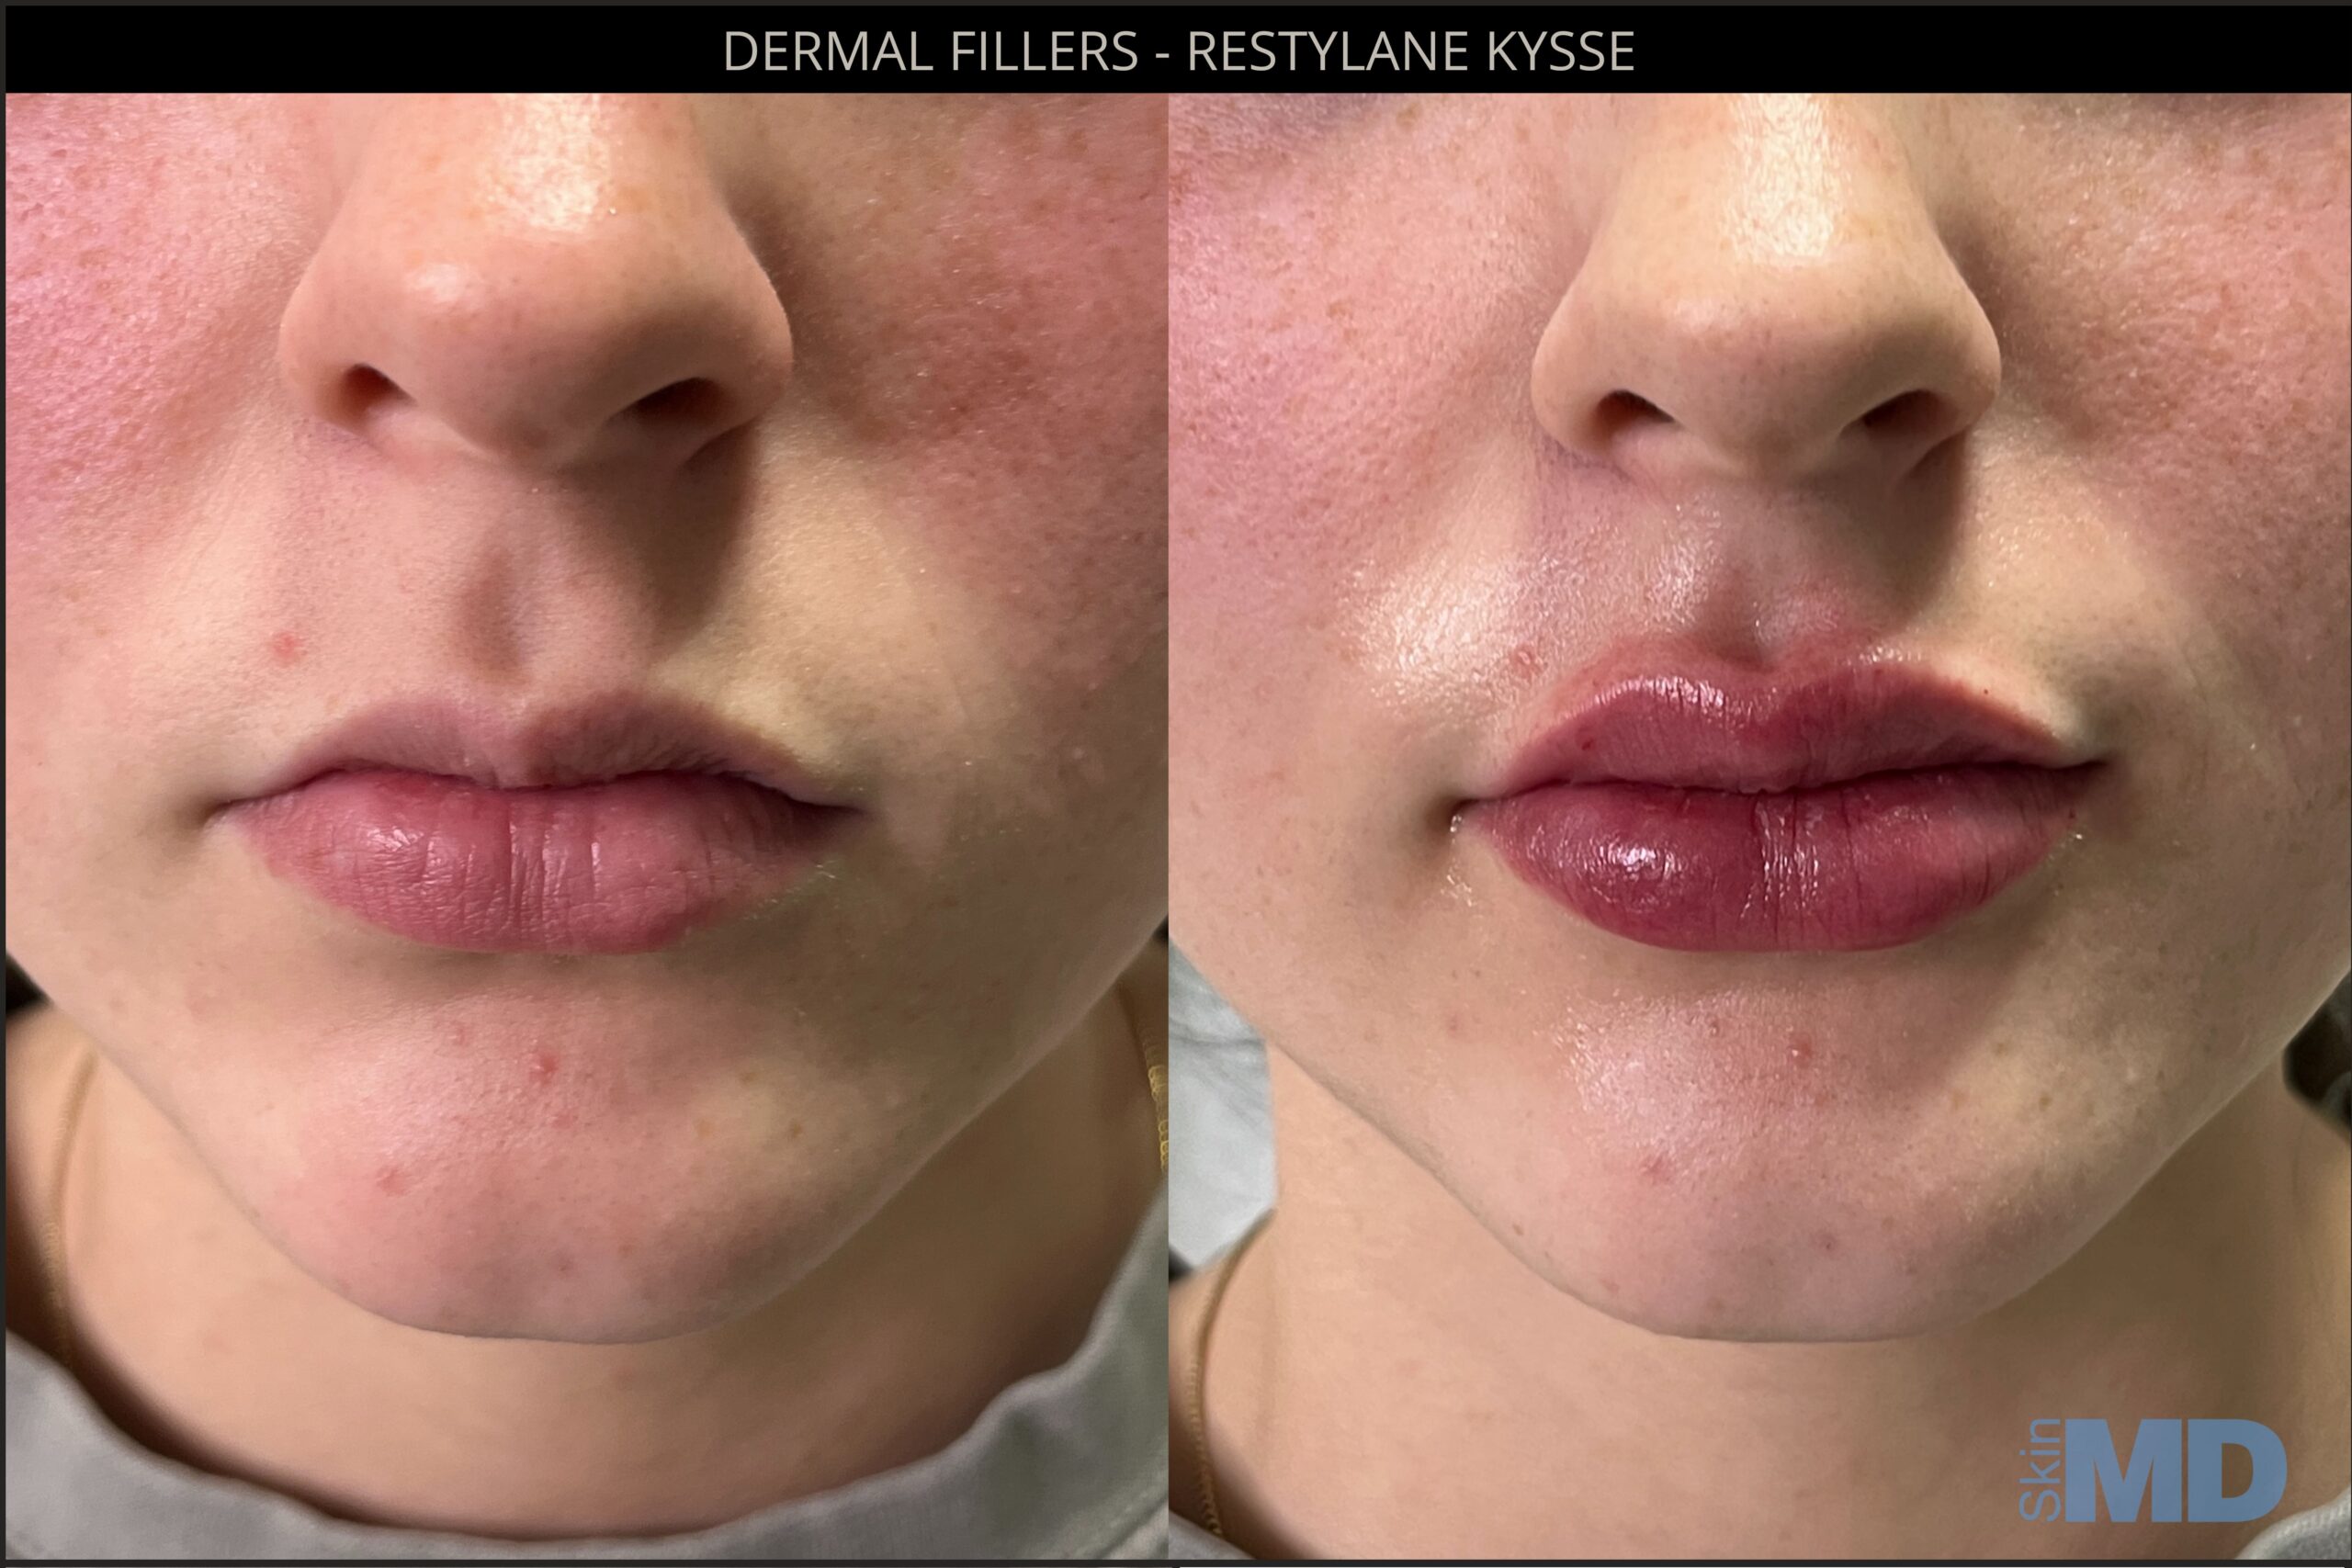 Before and after dermal filler results